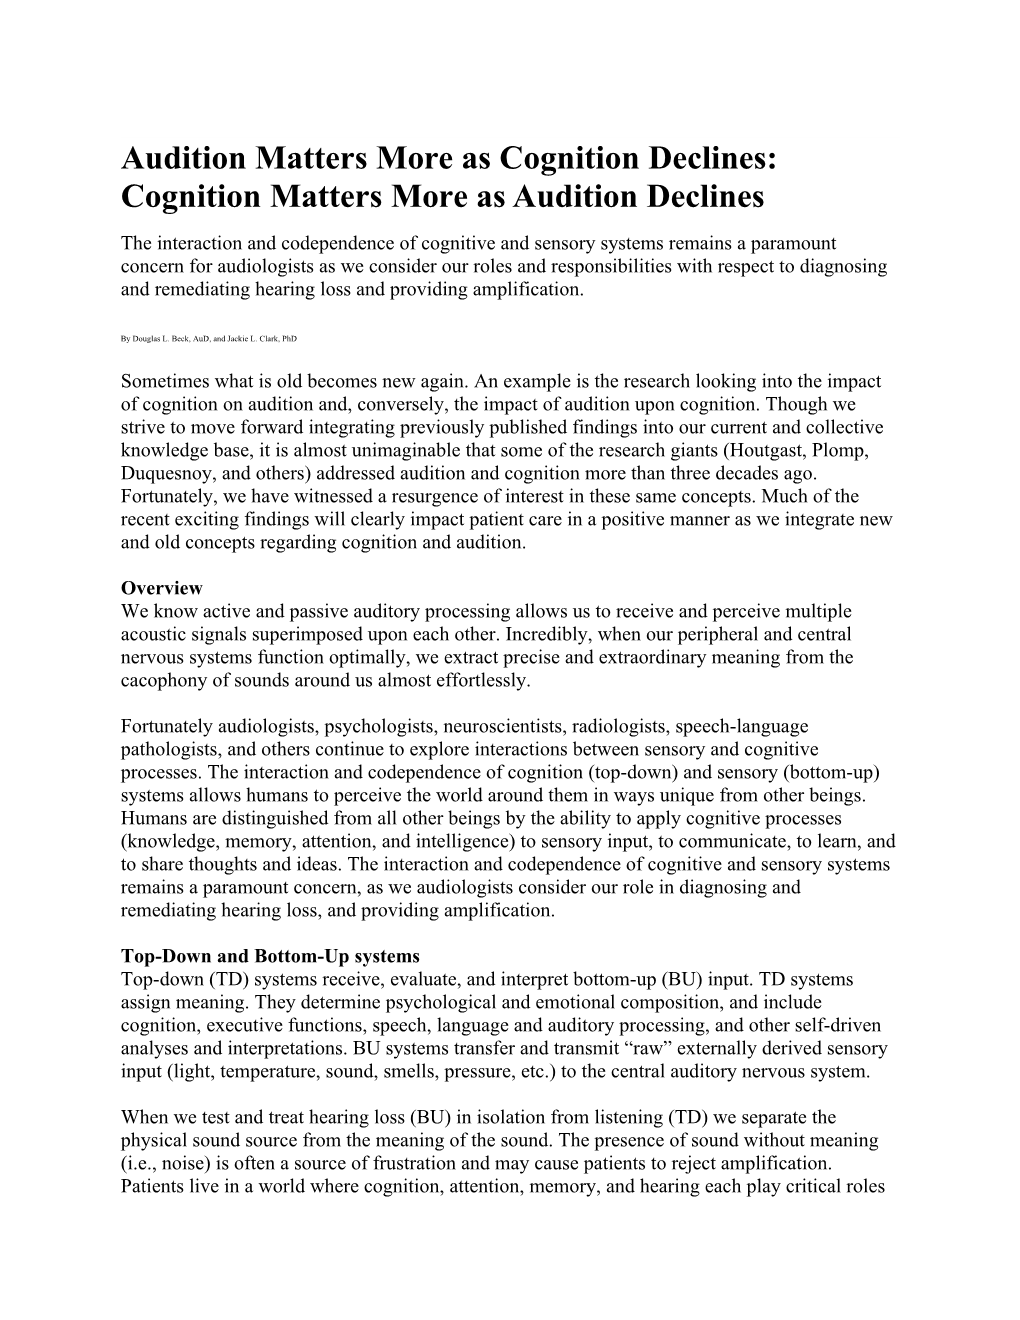 Audition Matters More As Cognition Declines: Cognition Matters More As Audition Declines